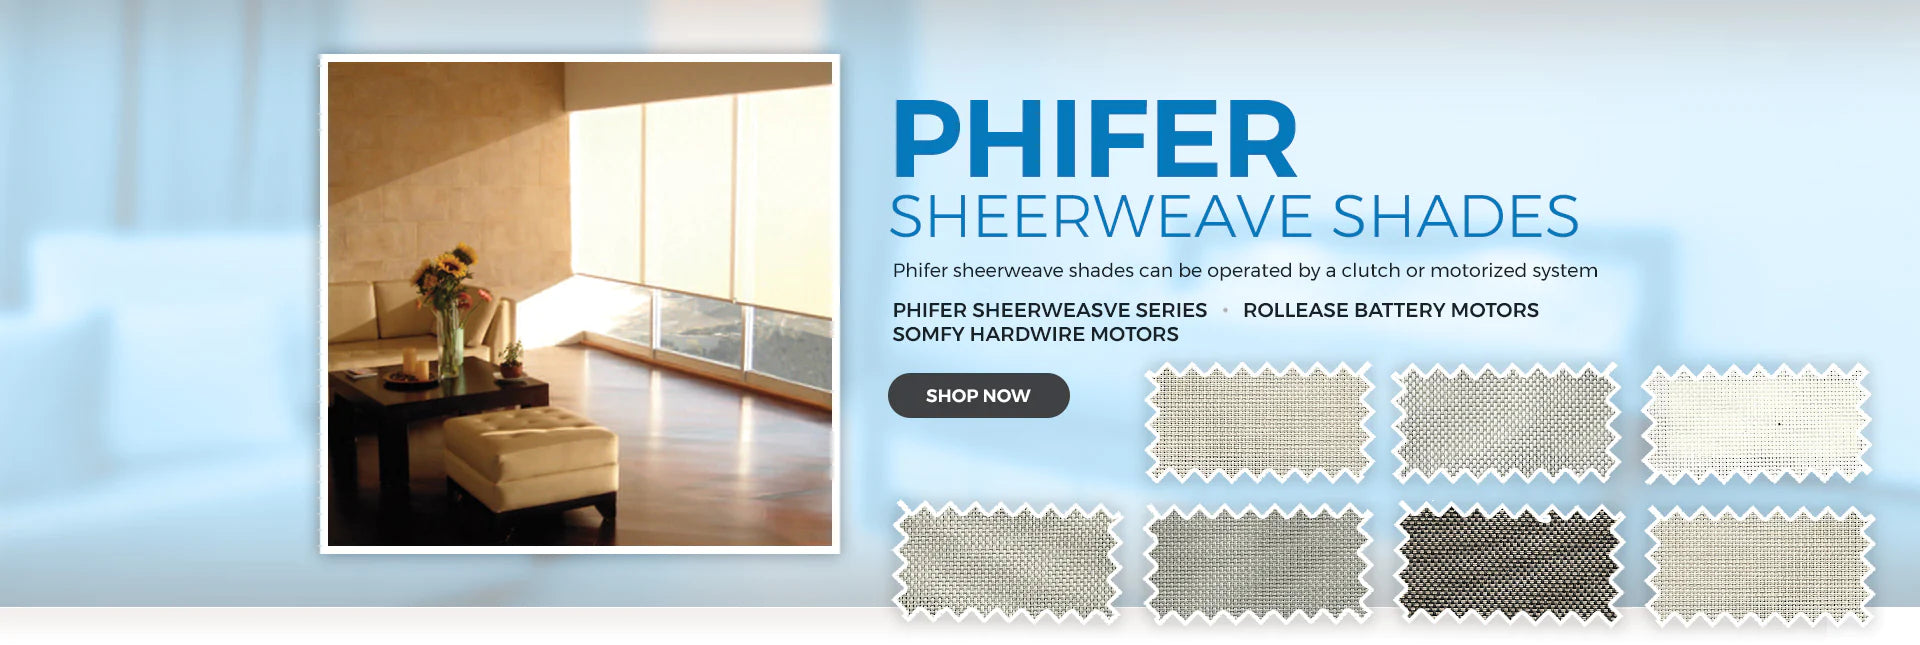 Phifer Sheerweave Shades